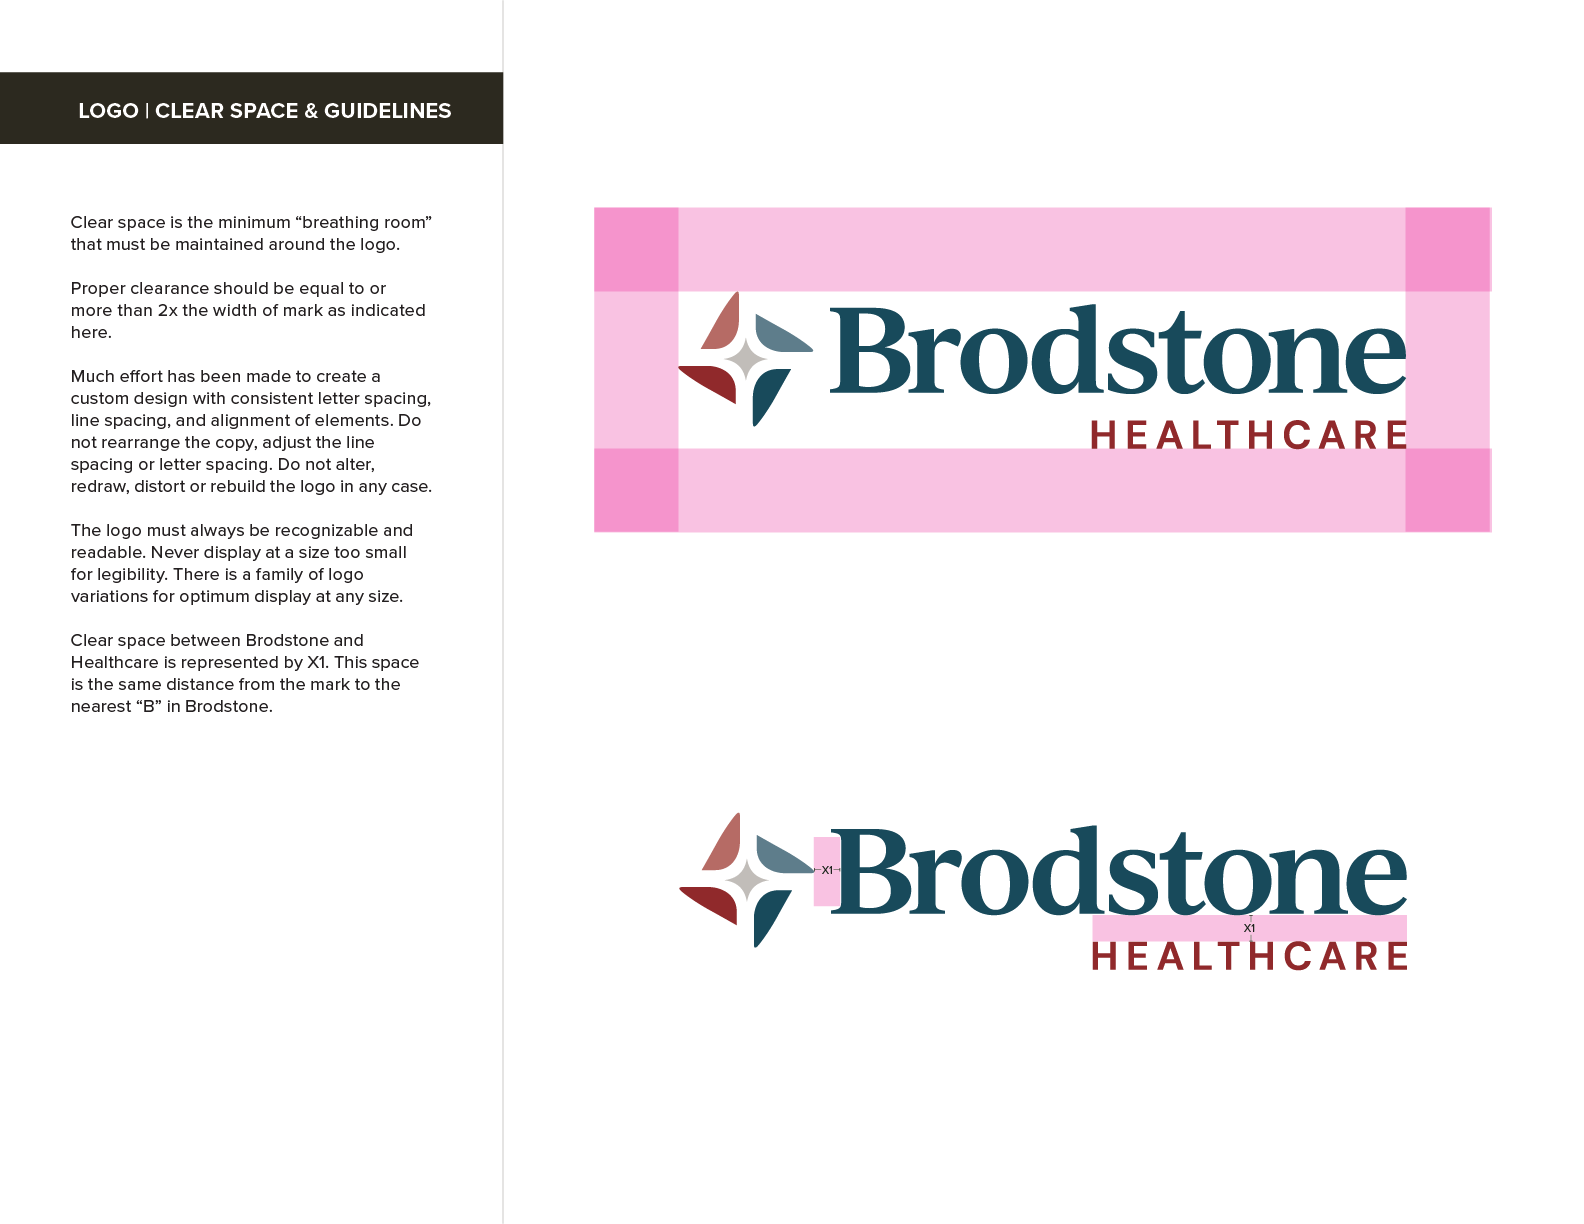 Brodstone Healthcare Brand Guide Spacing